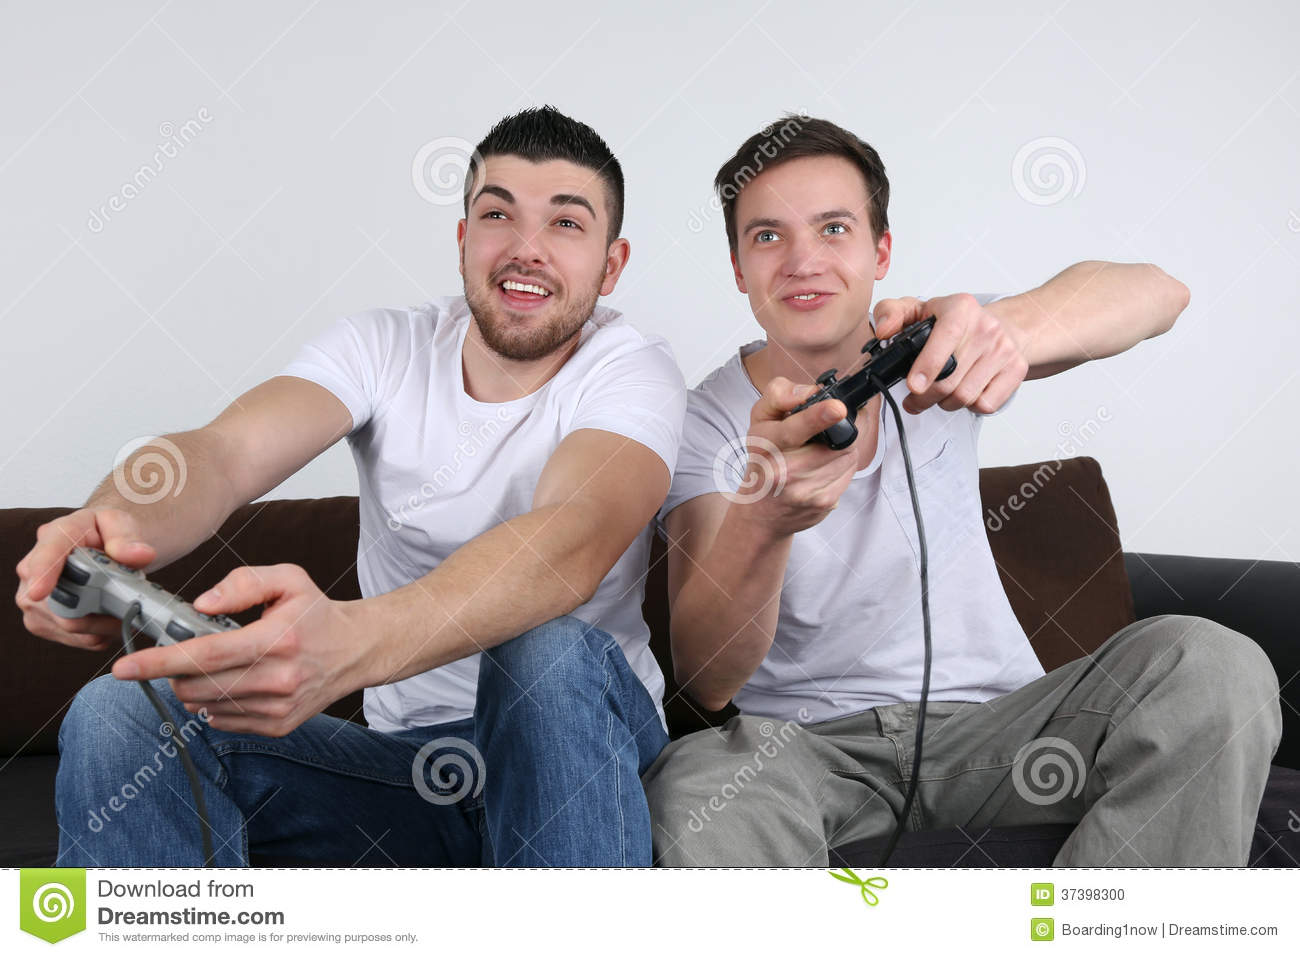 young-people-having-fun-playing-video-games-37398300.jpg